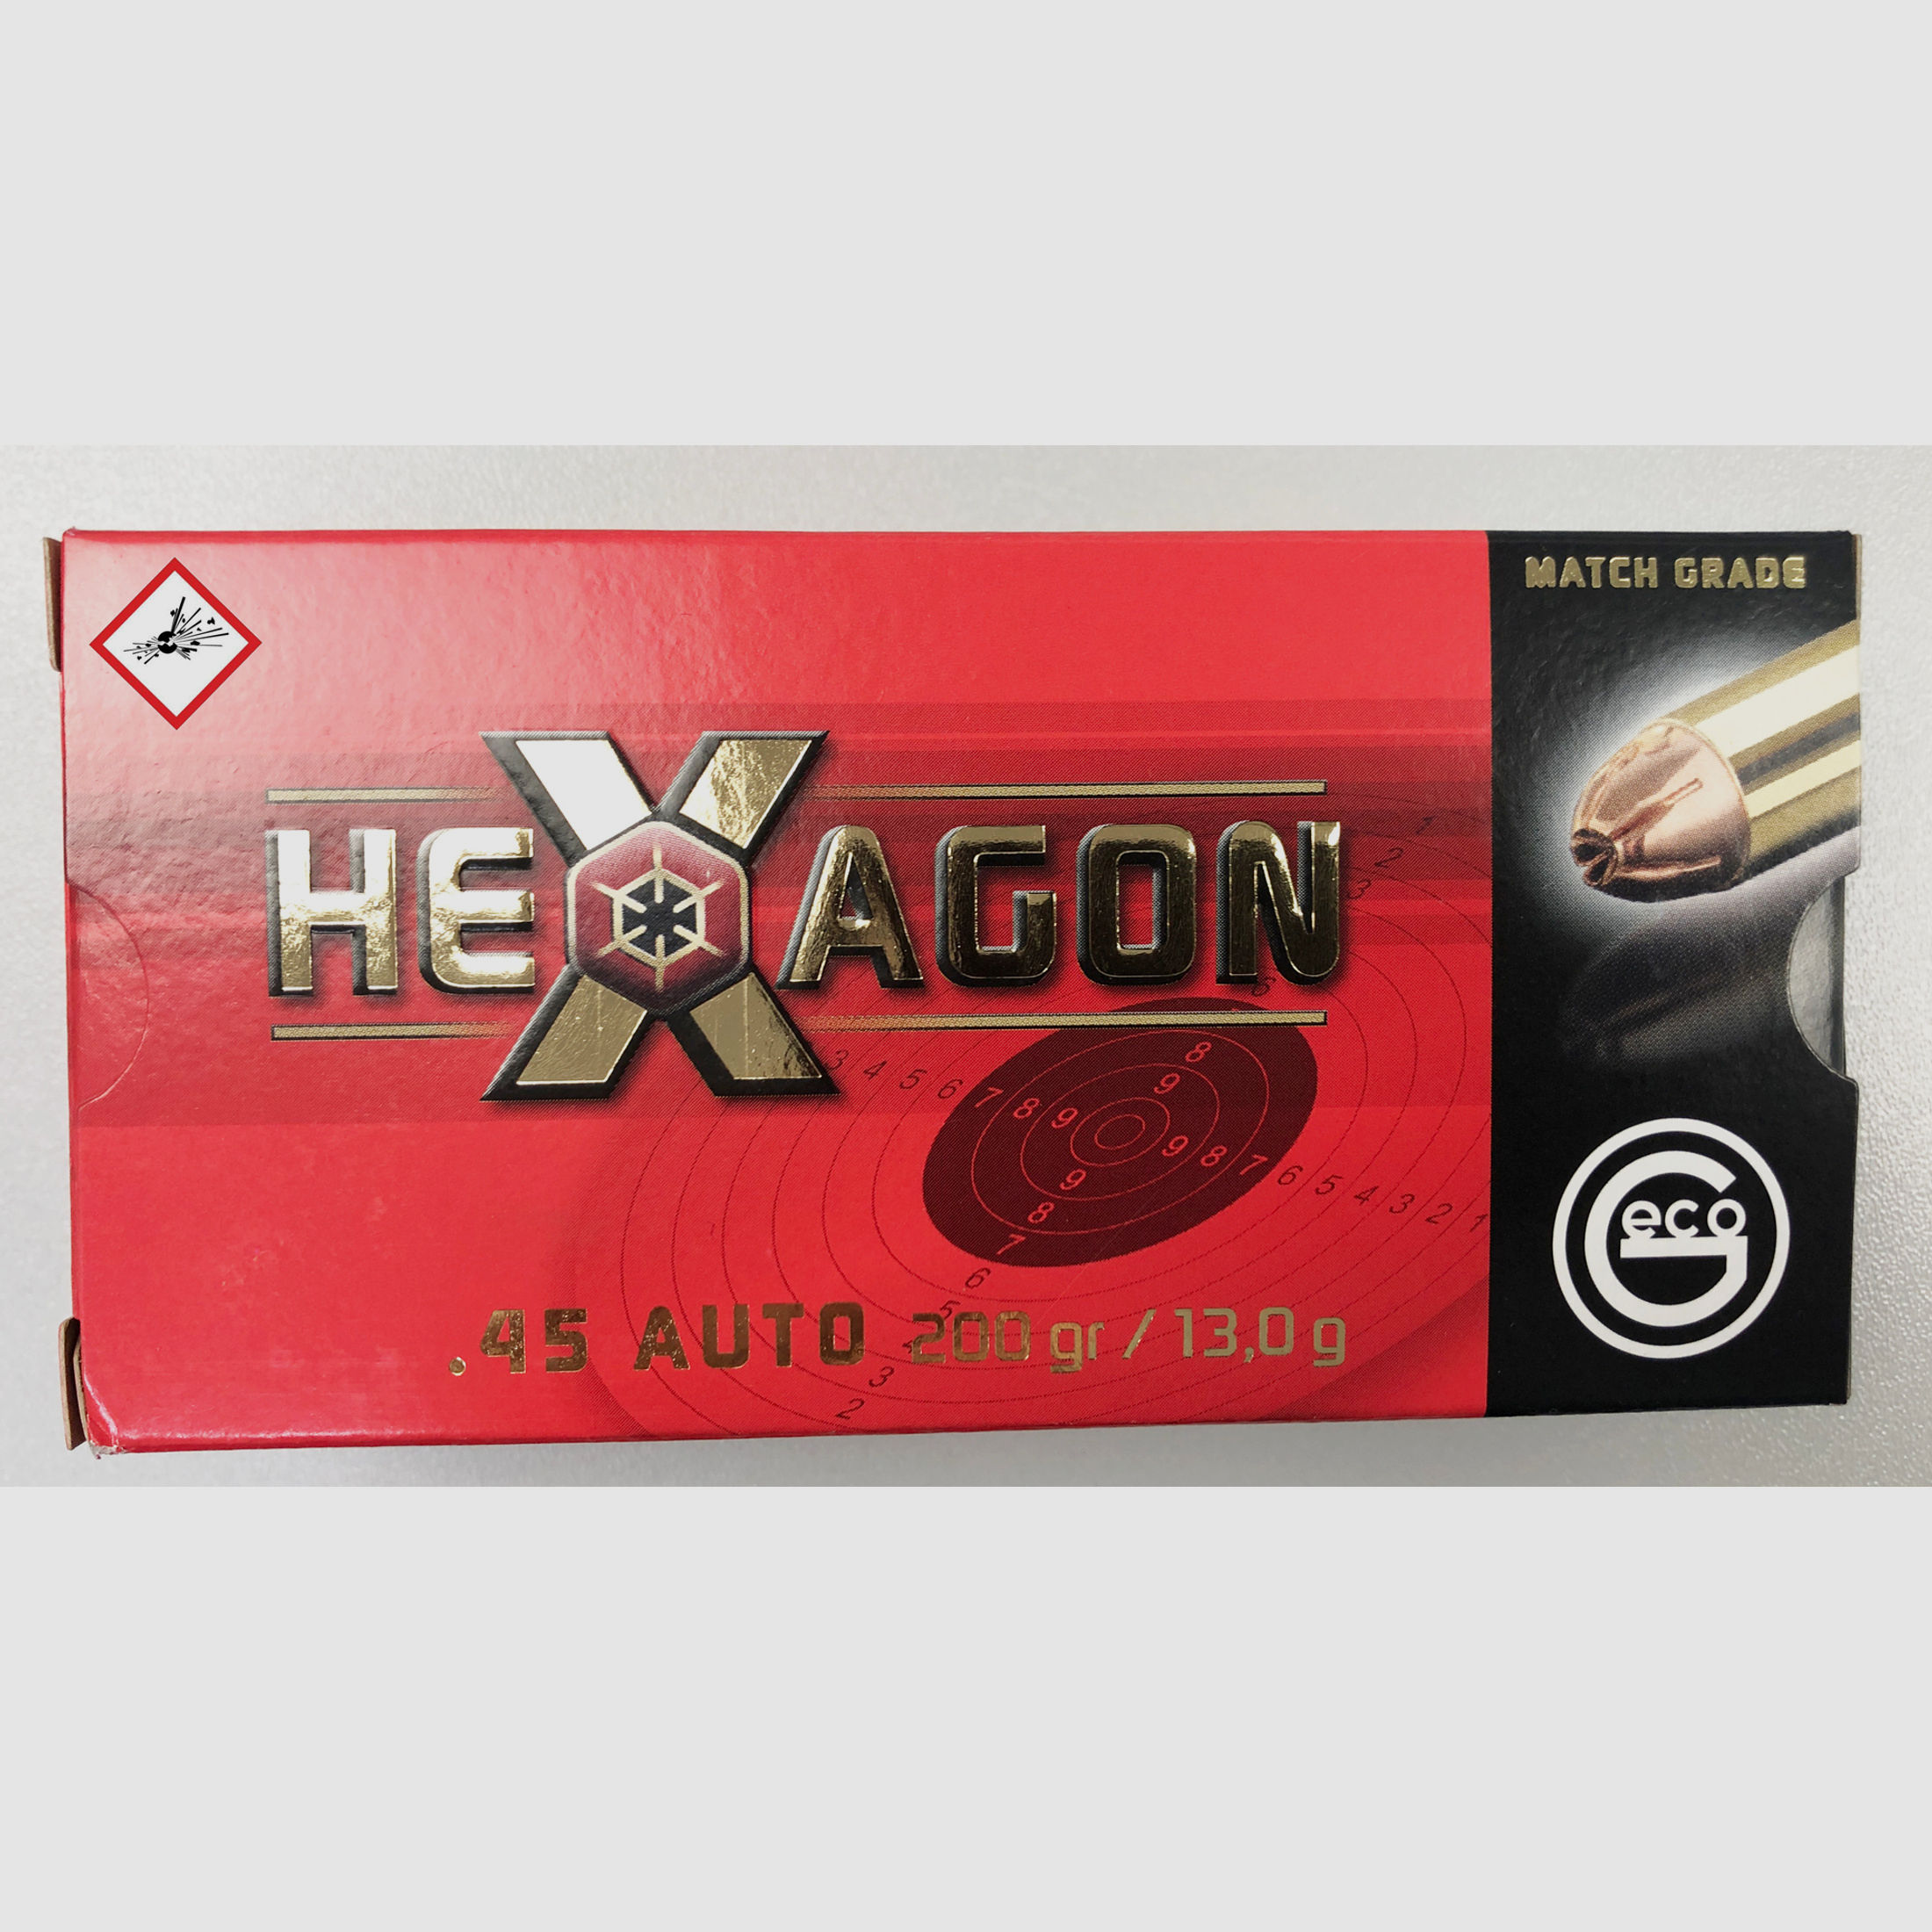 Geco Hexagon Pistolenpatrone .45 Auto 200 gr